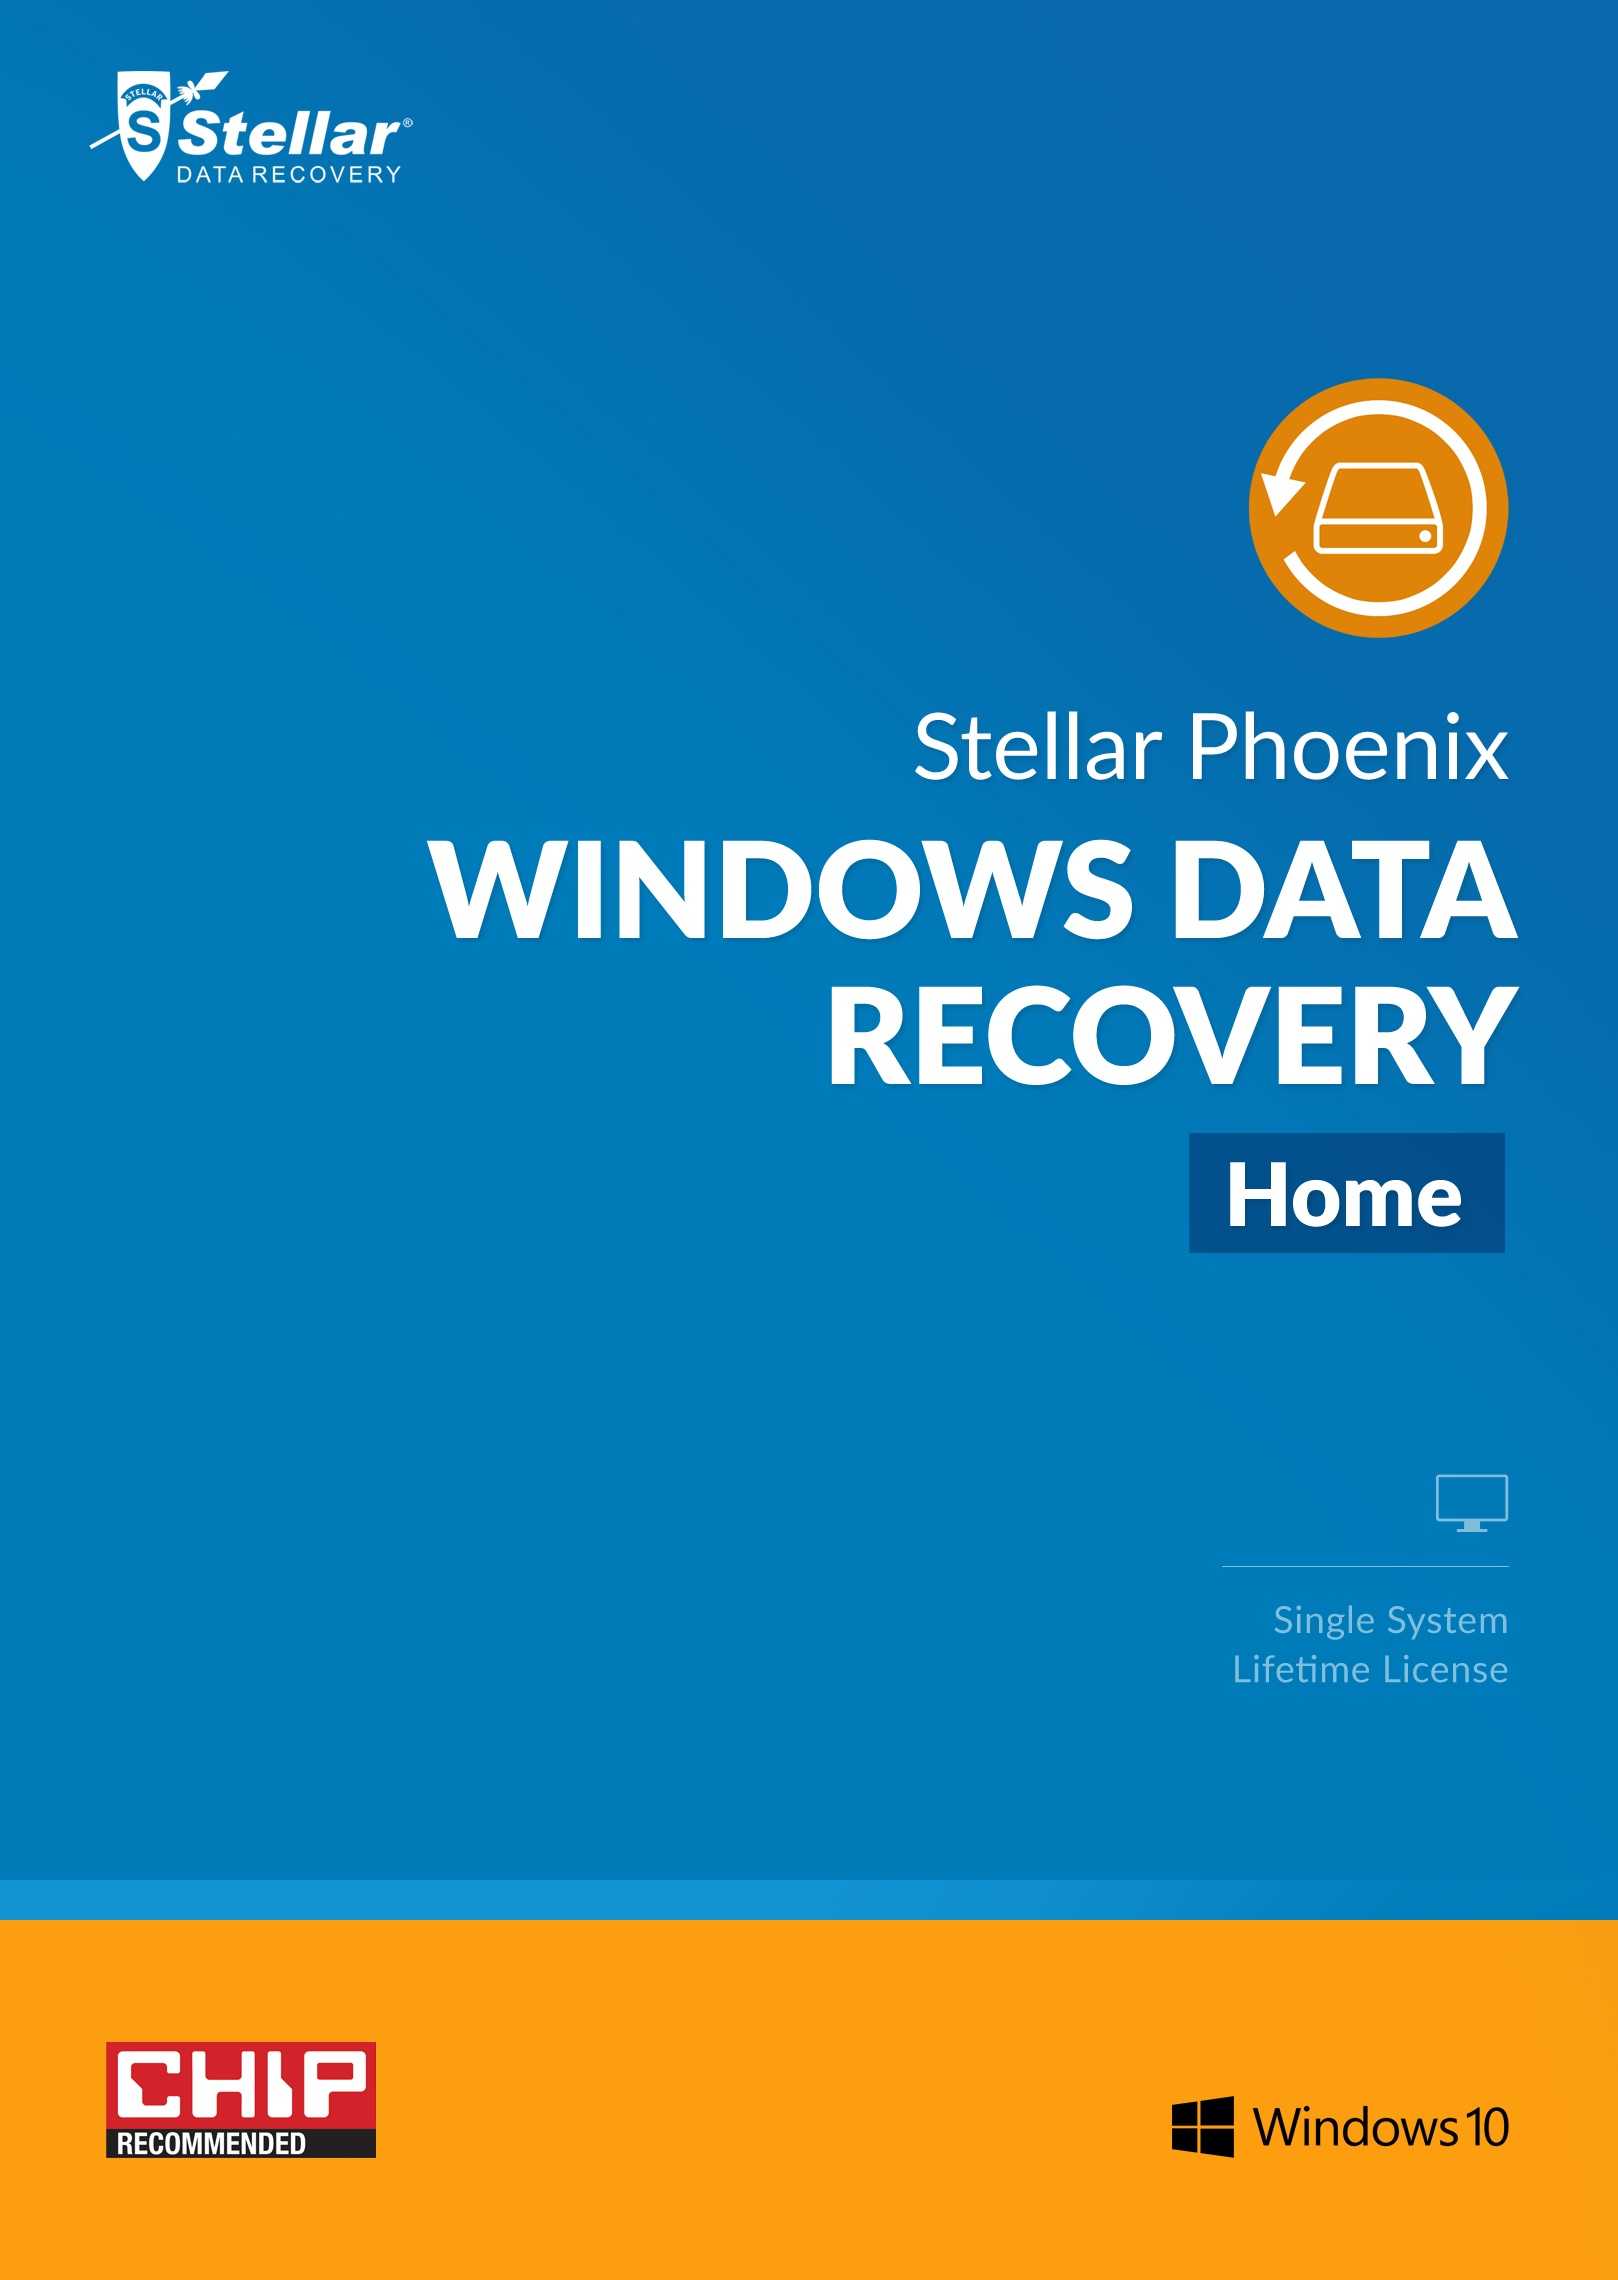 stellar data recovery free trial